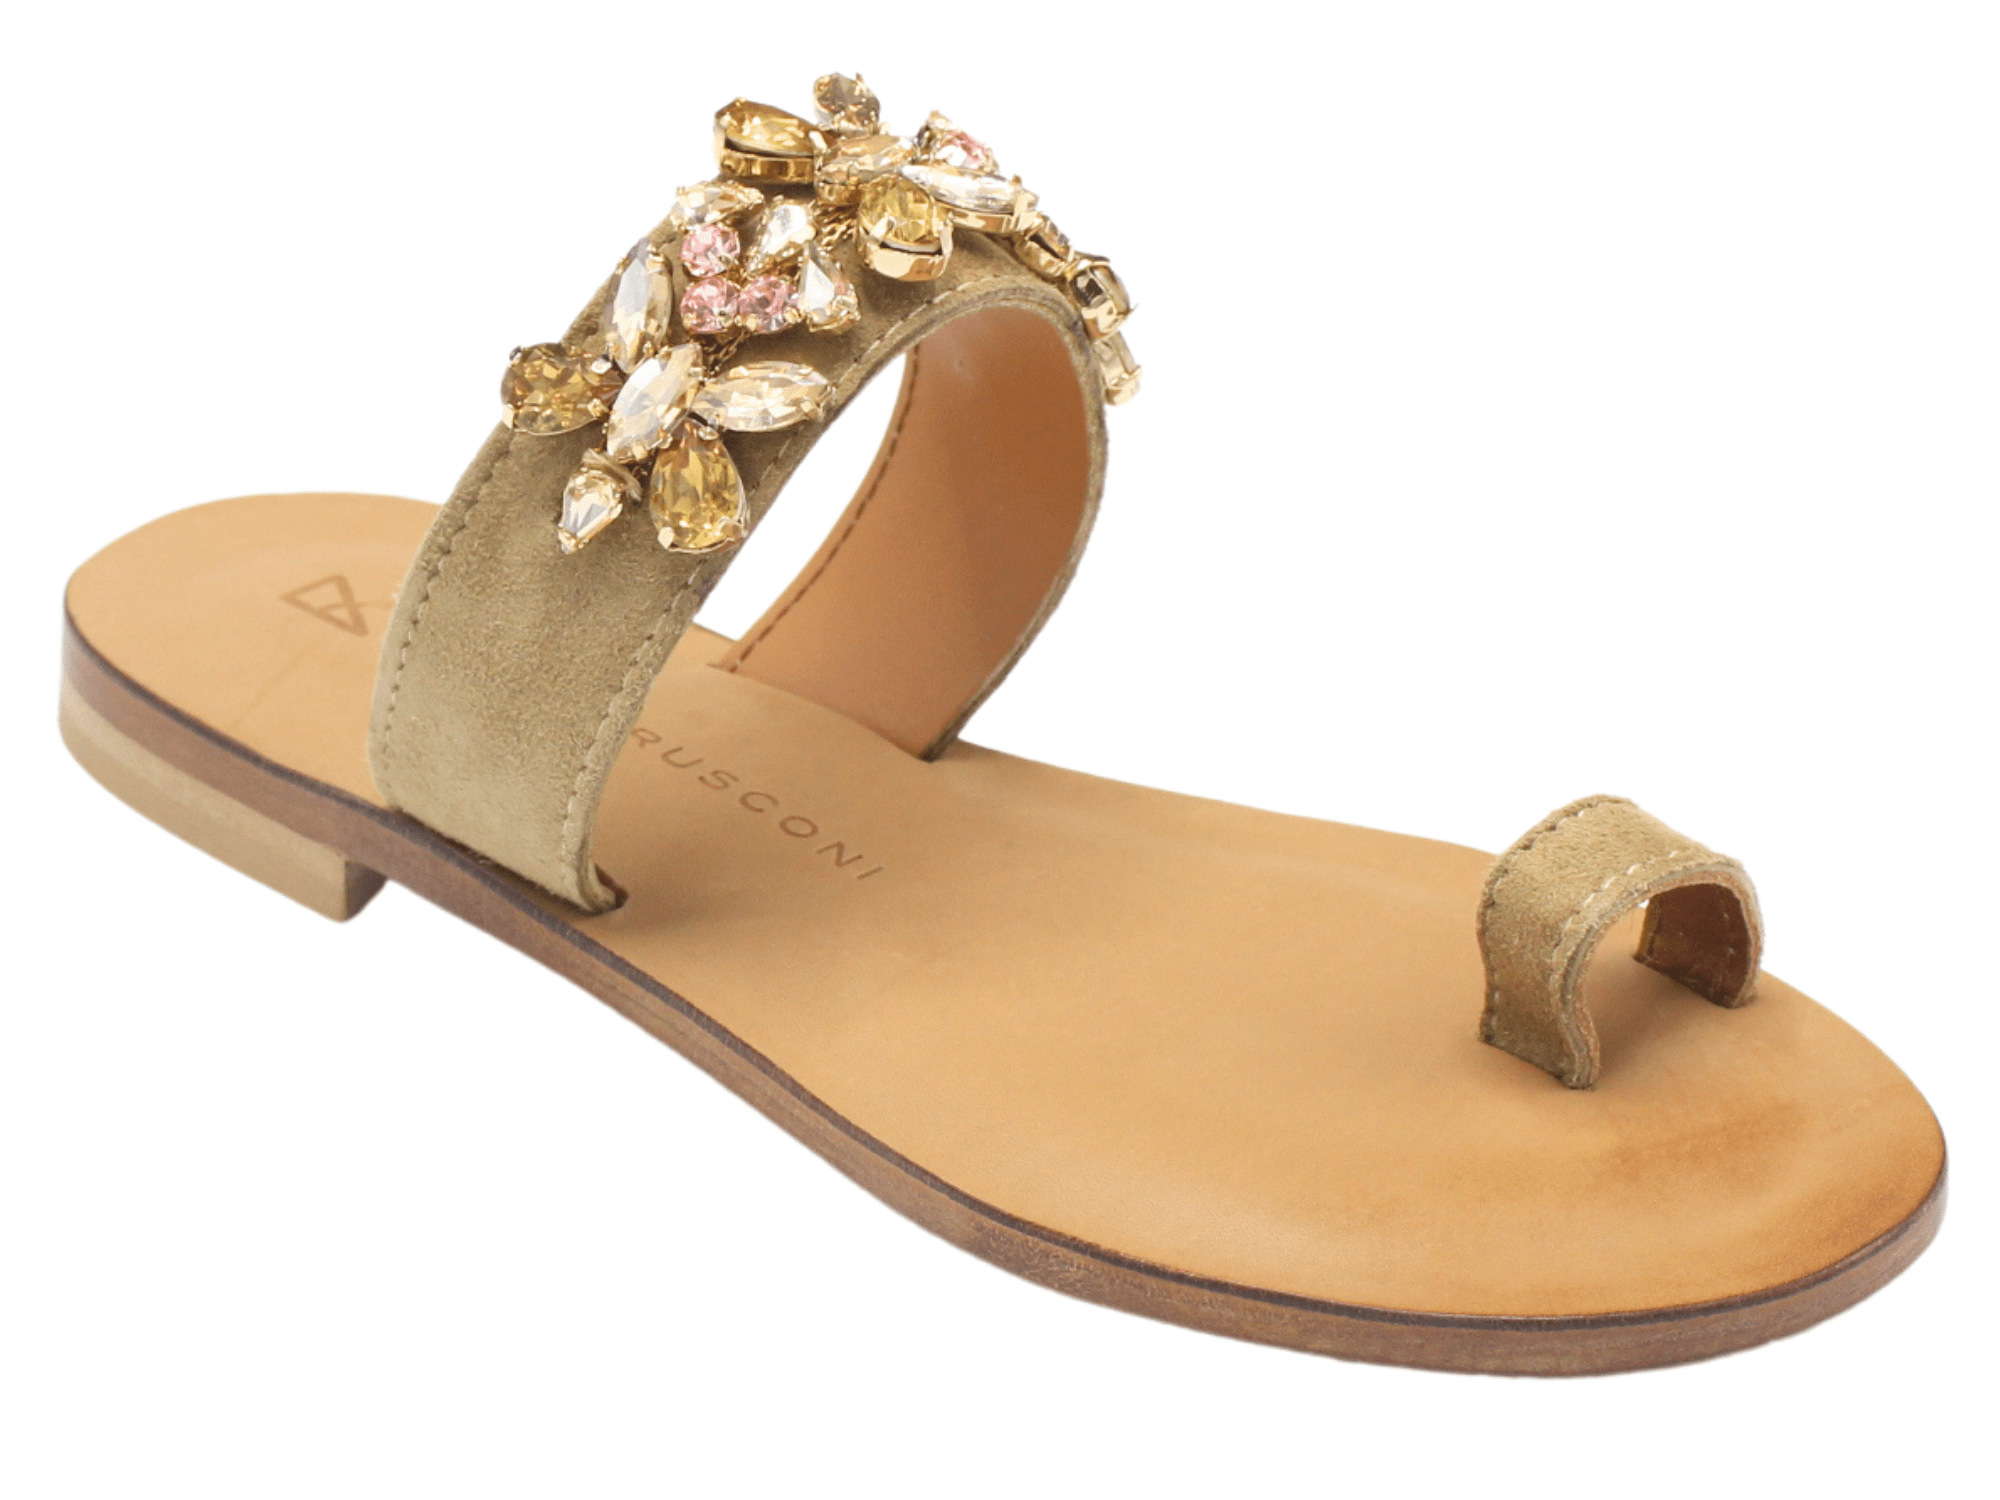 DM12 Jeweled Sandal